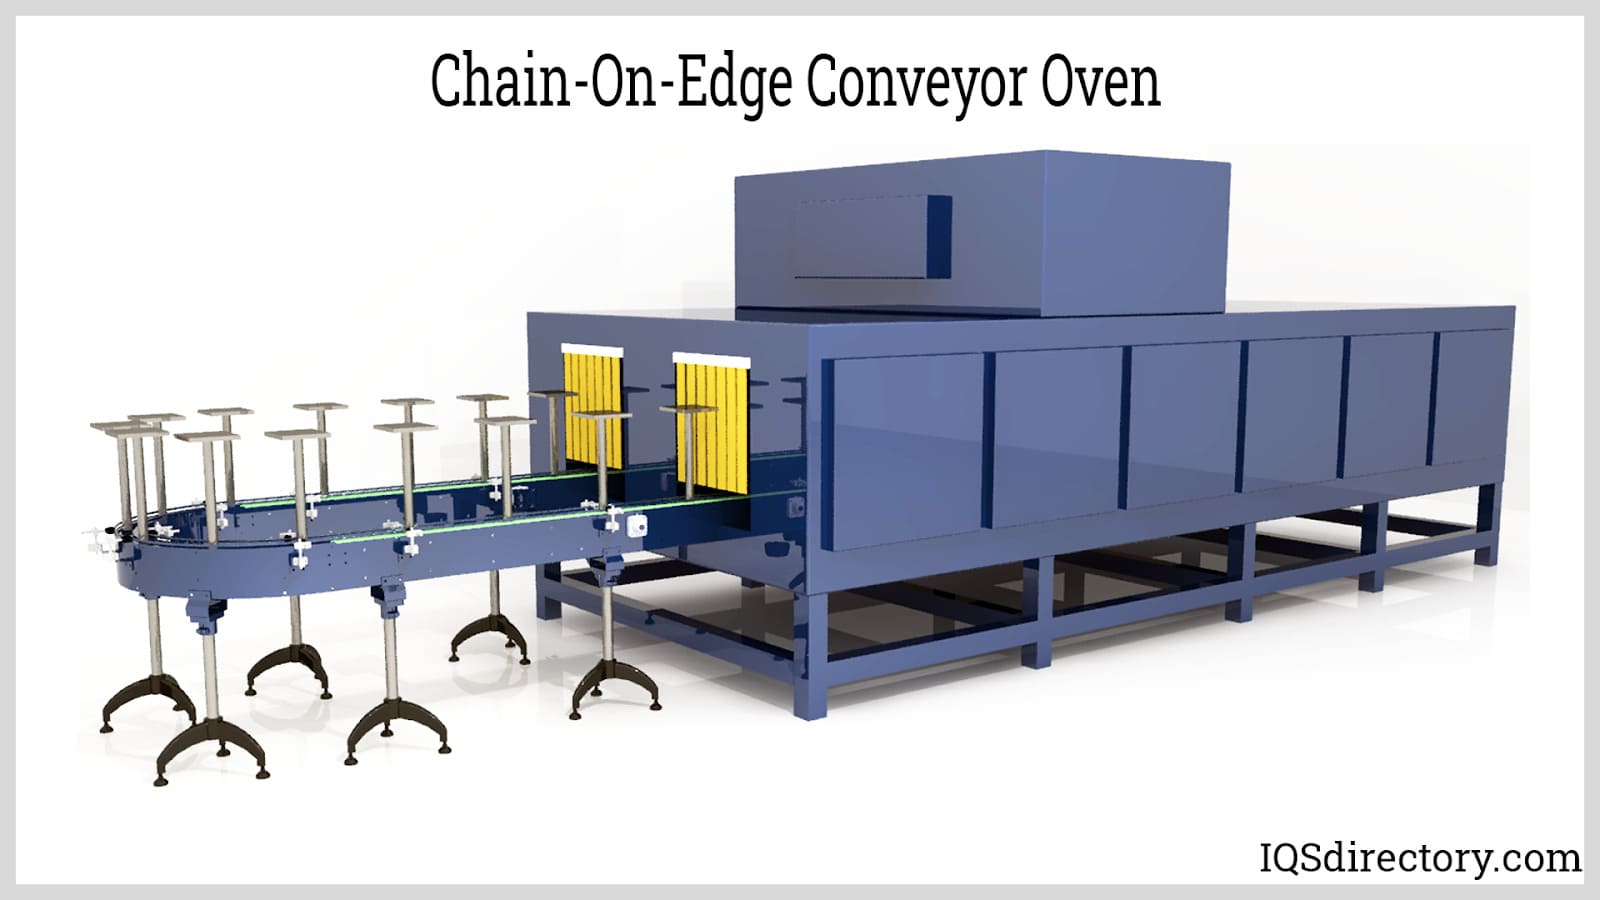 Chain-On-Edge Conveyor Oven